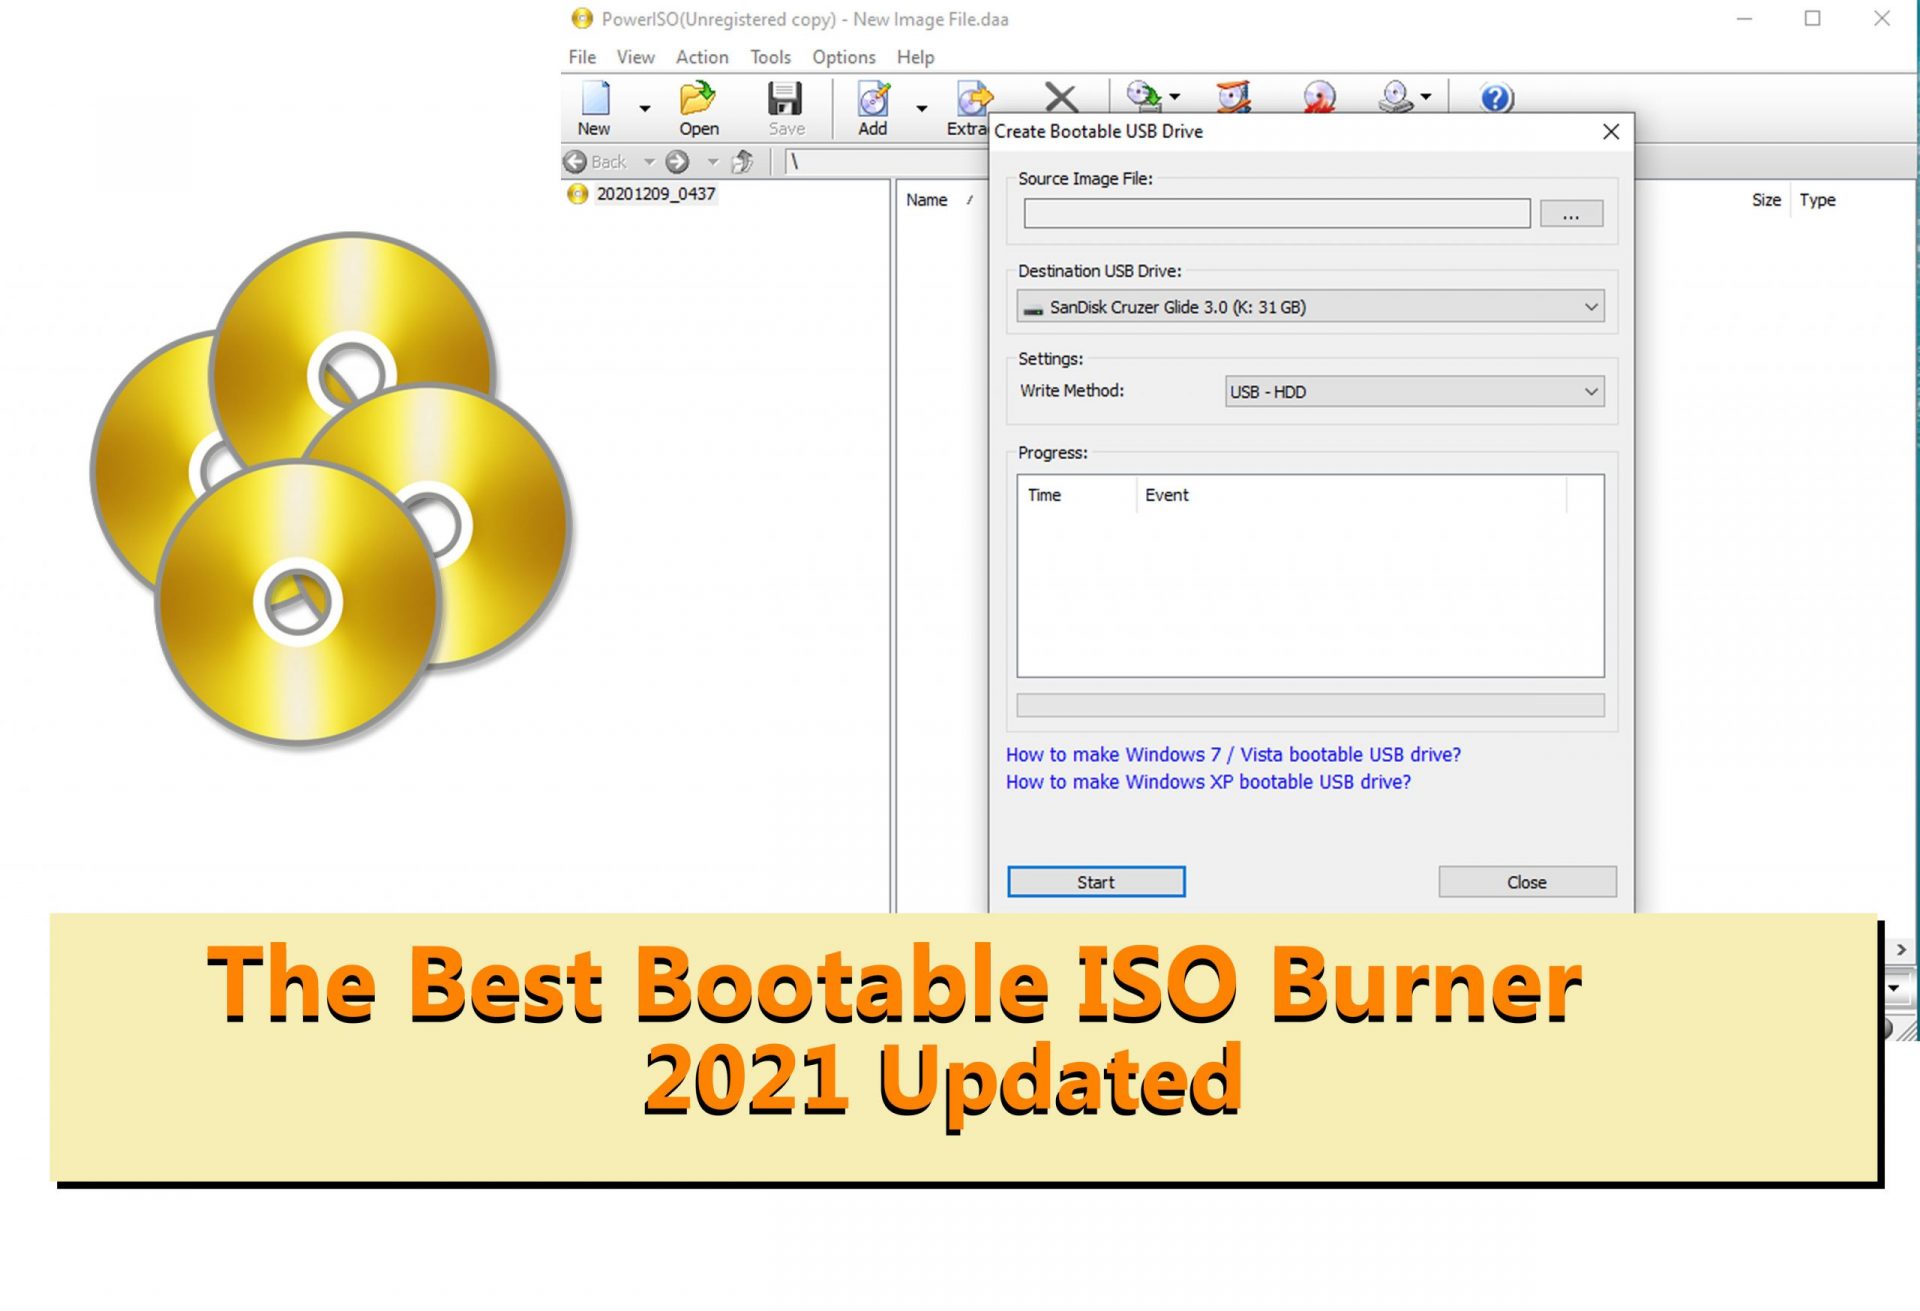 bootable ISO burner software